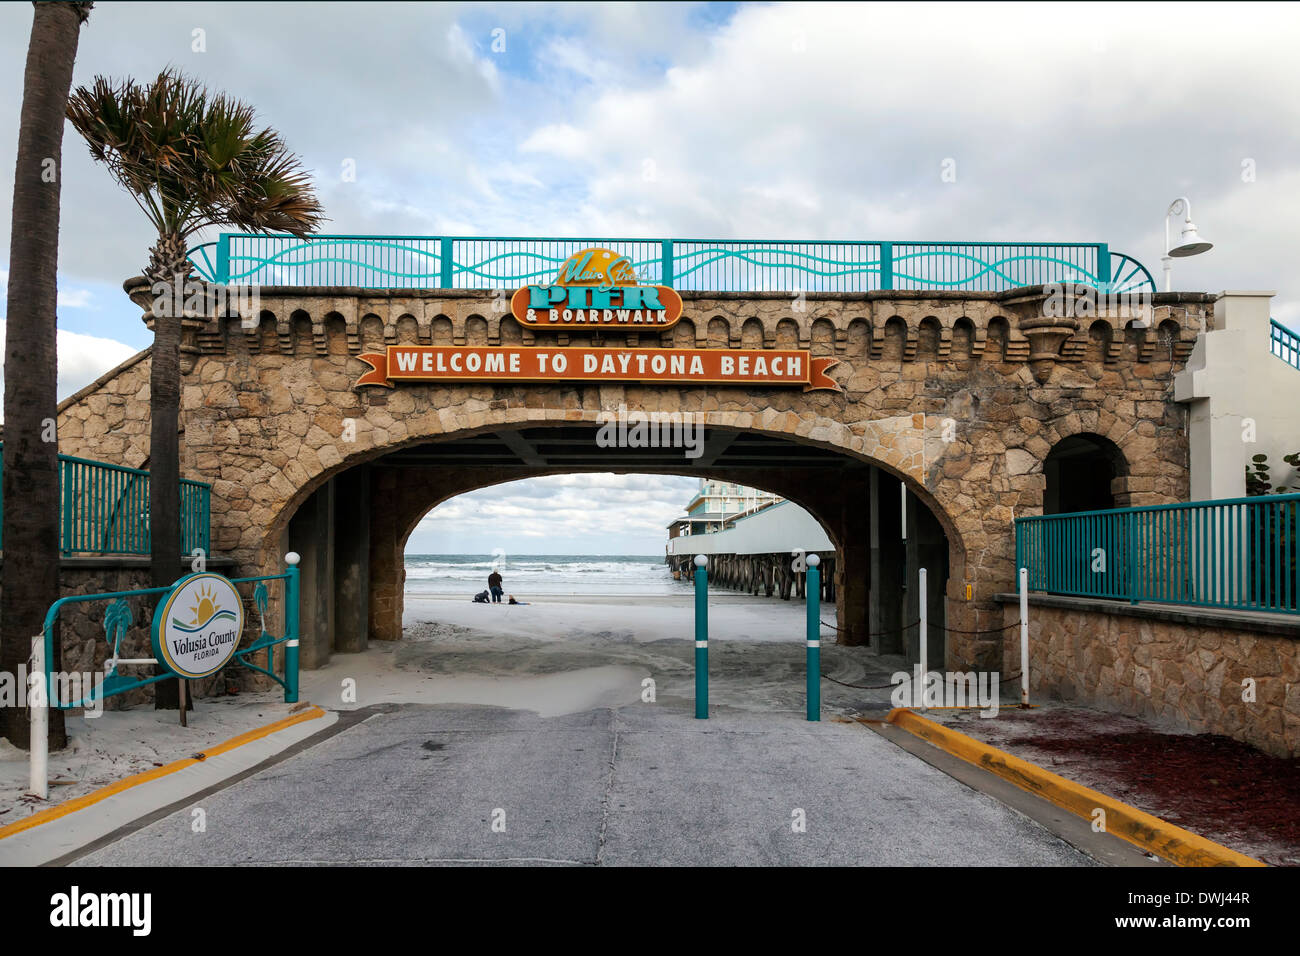 Welcome to Daytona Beach Pier signs and archway portal over the road onto Daytona Beach, Florida, USA. Stock Photo